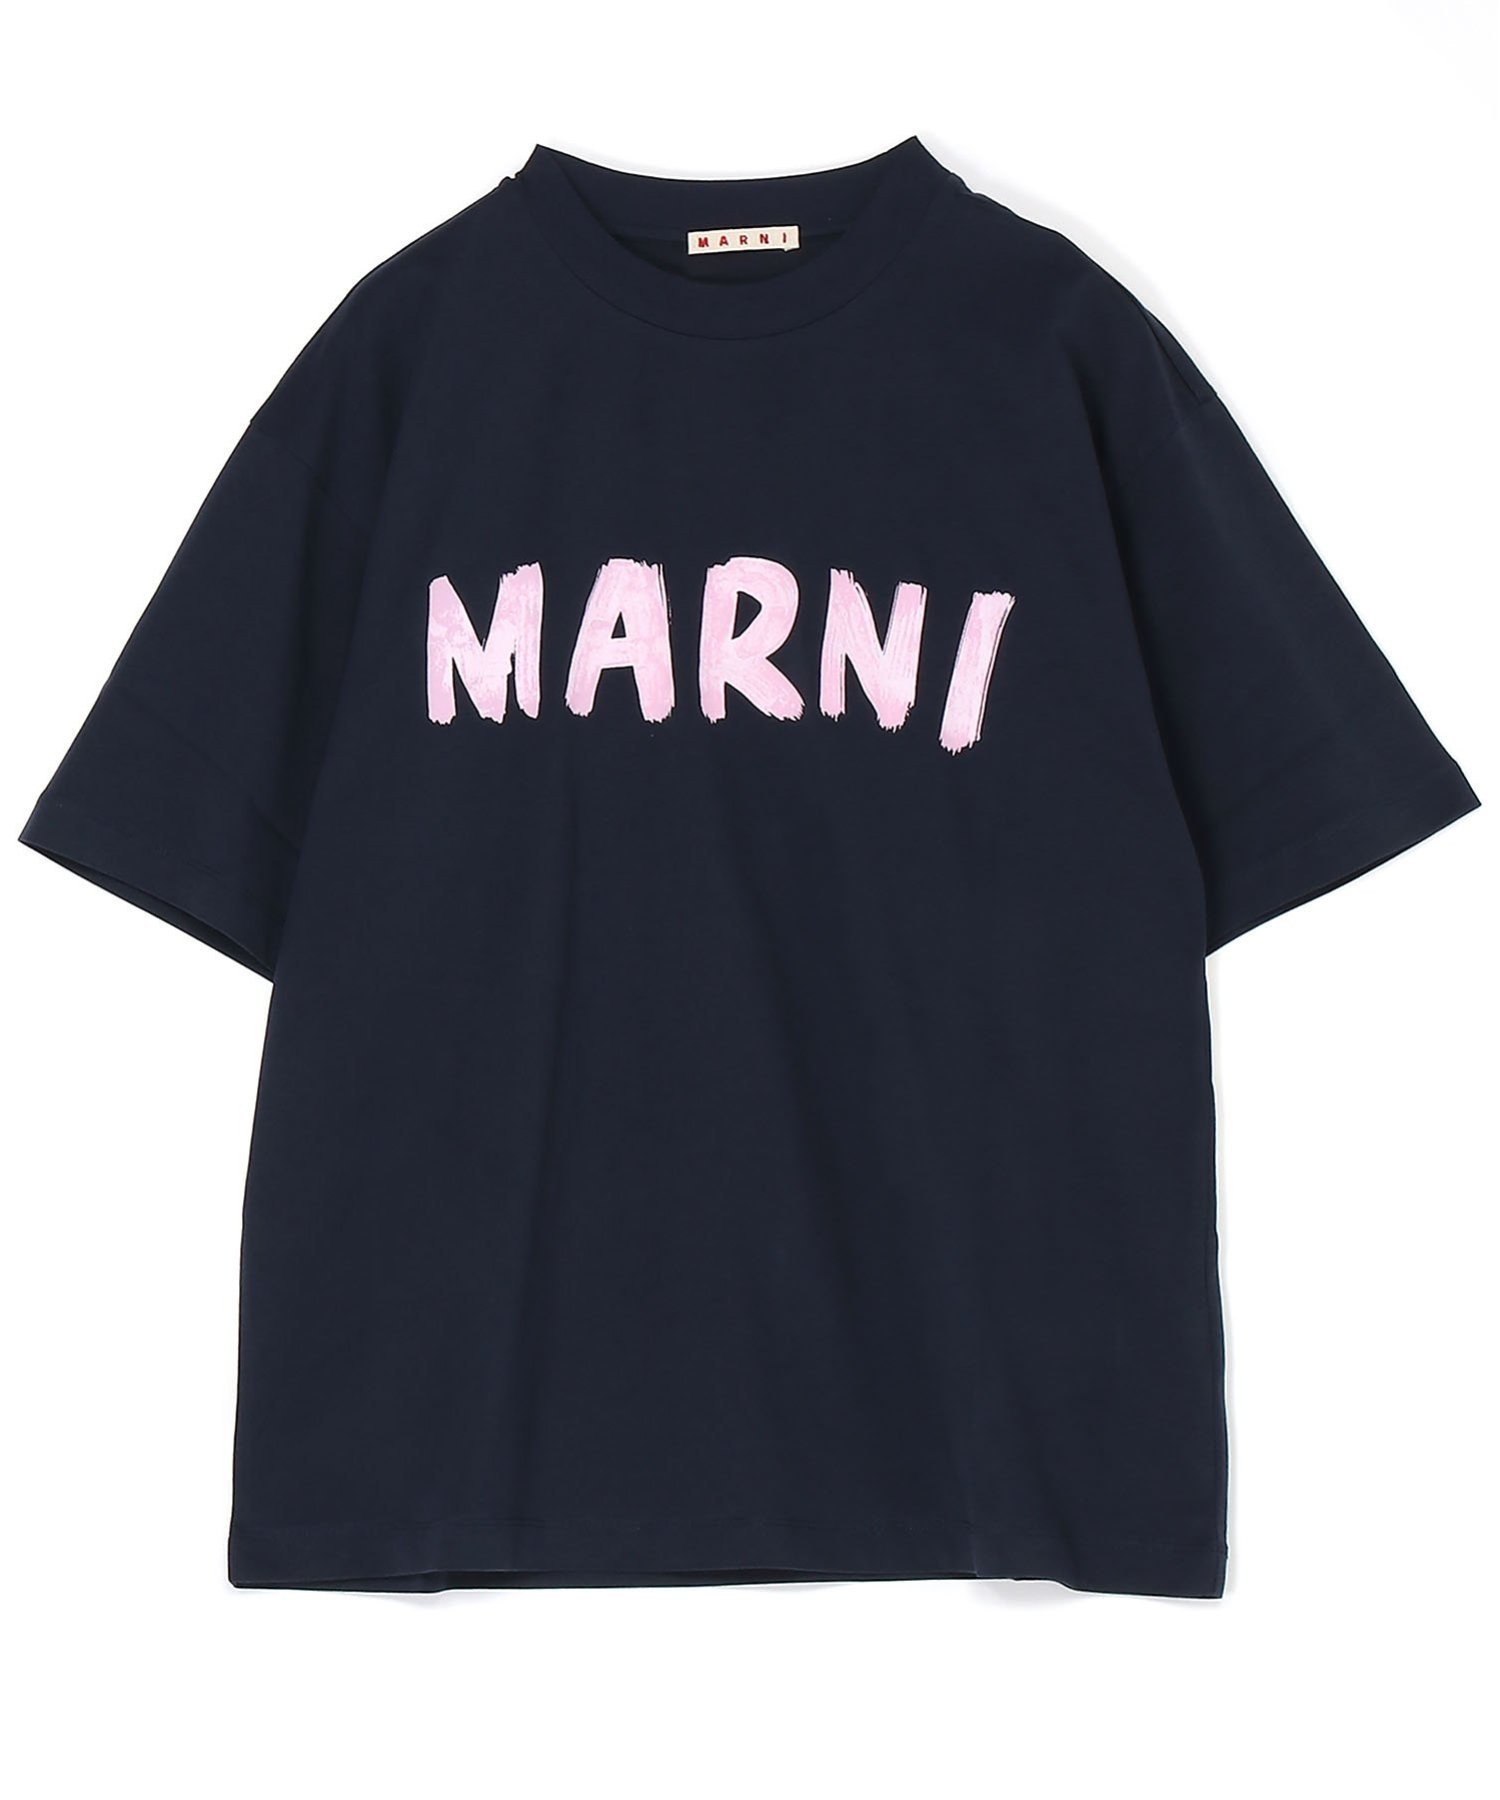 MARNI｜ロゴプリントTシャツ   Rakuten Fashion楽天ファッション